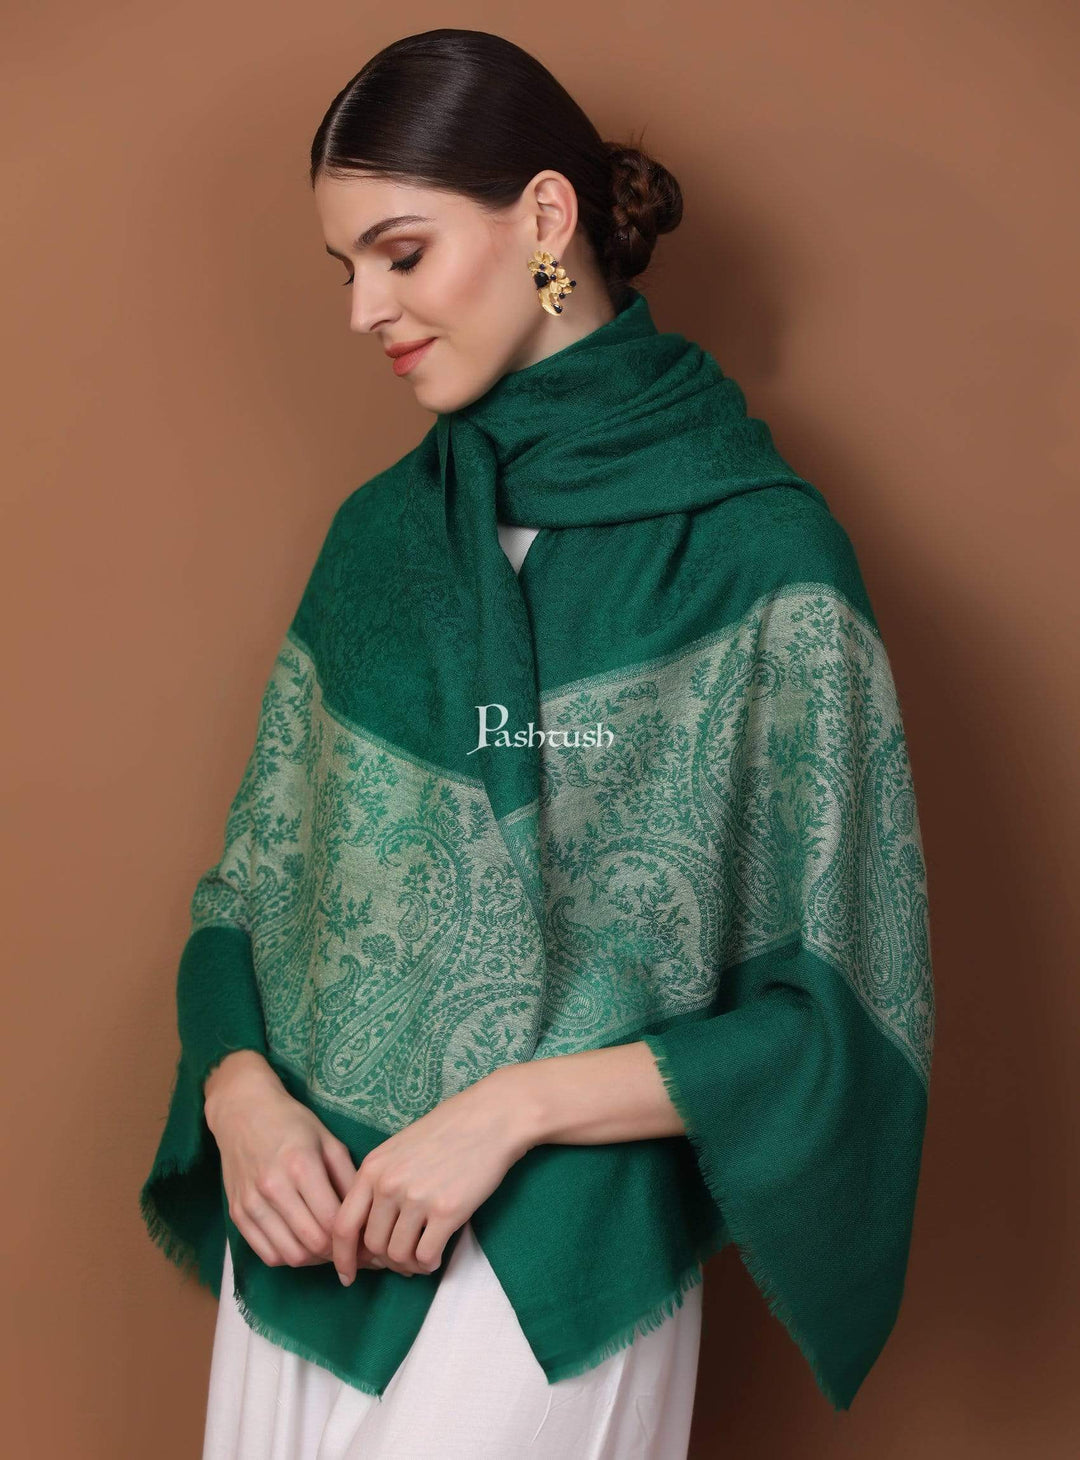 Pashtush India 70x200 Pashtush Womens Scarf with Chanting Paisleys Design, Soft and Warm, Emerald Green